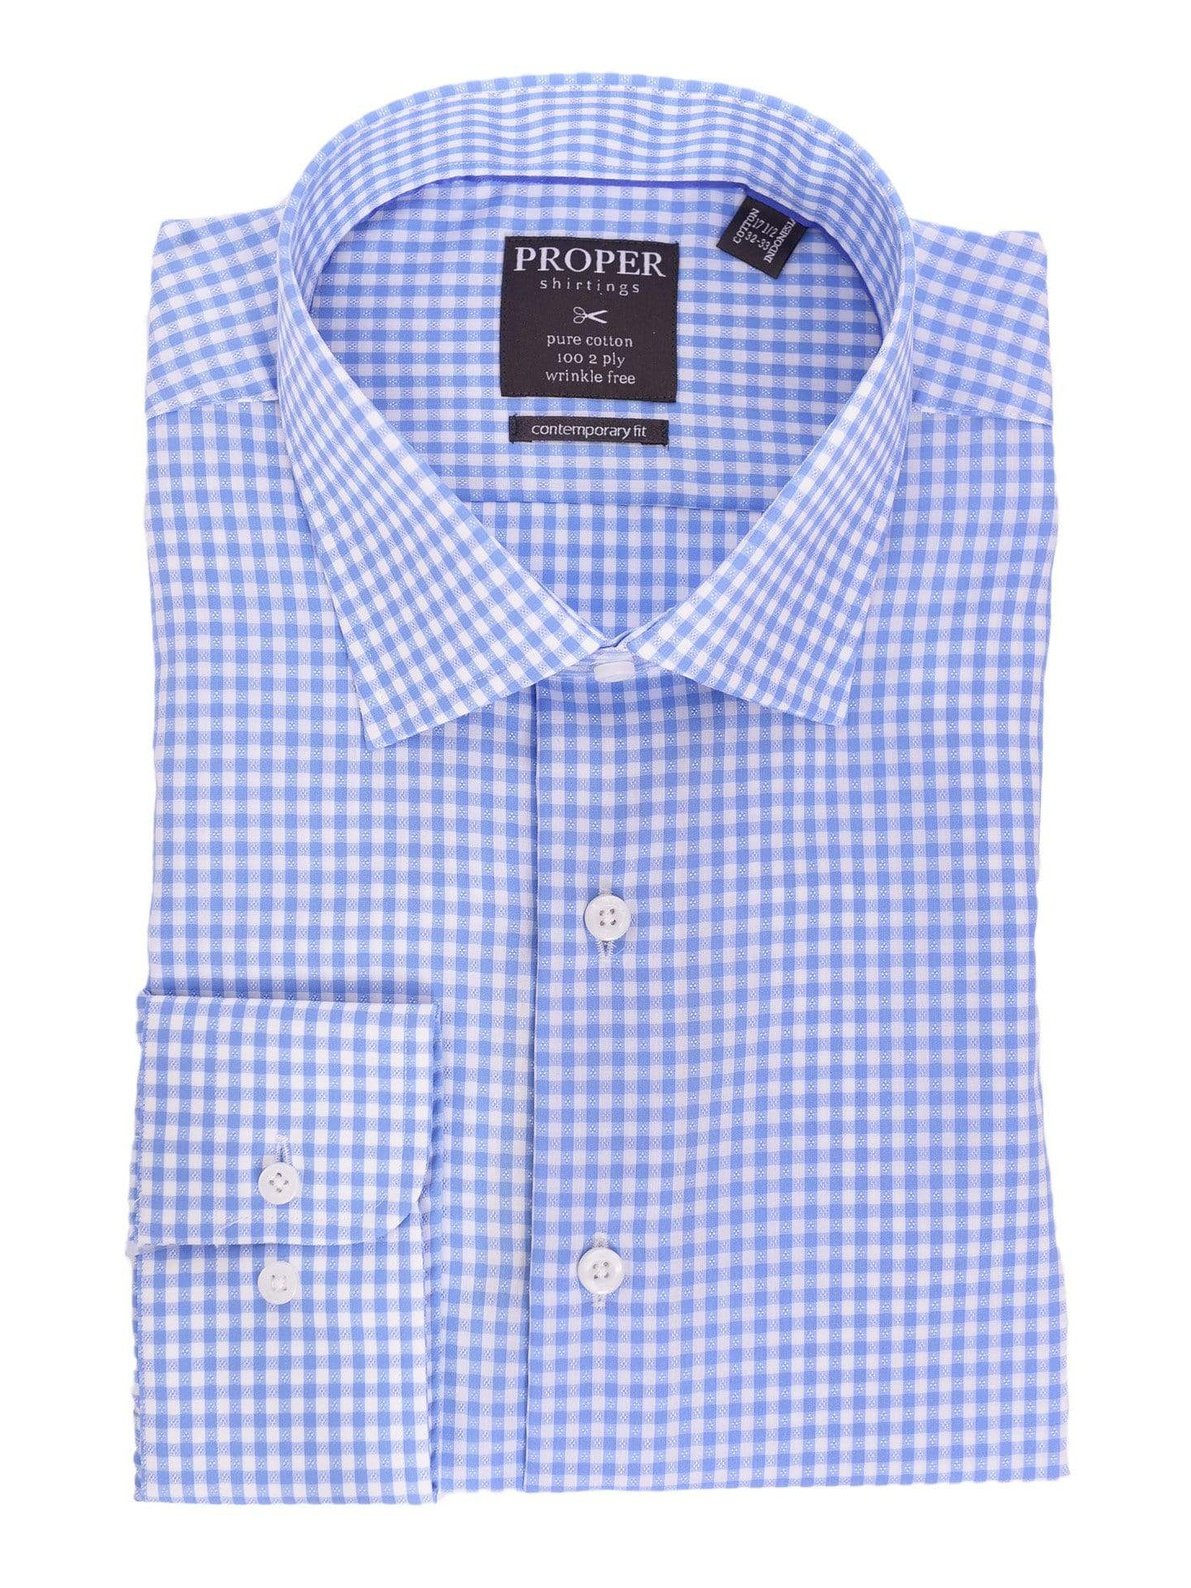 Proper Shirtings SHIRTS 17 1/2 32/33 Blue &amp; White Check Spread Collar Wrinkle Free 100 2 Ply Cotton Dress Shirt